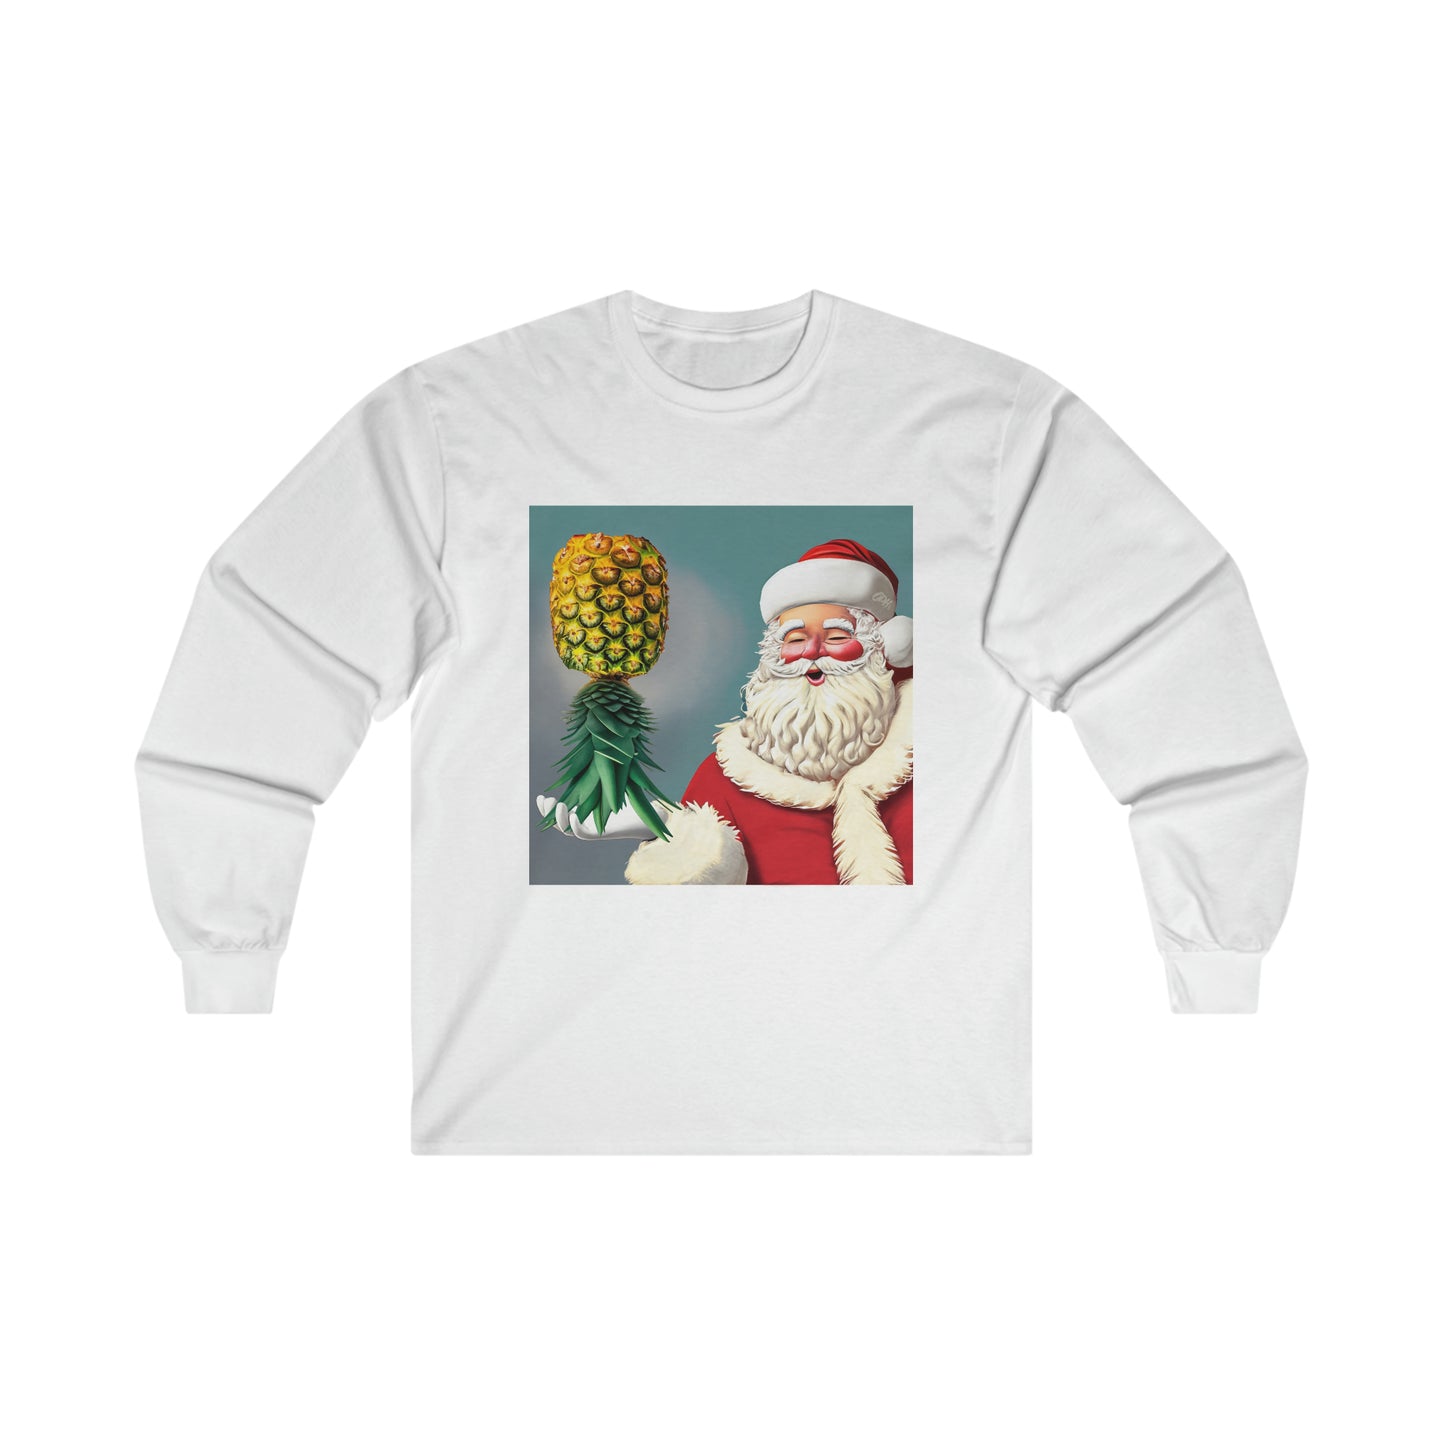 Upside Down Pineapple Santa Claus Long Sleeve Shirt, Christmas Sweater, Upside Down Pineapple T-shirt, Swingers Pullover Clothing